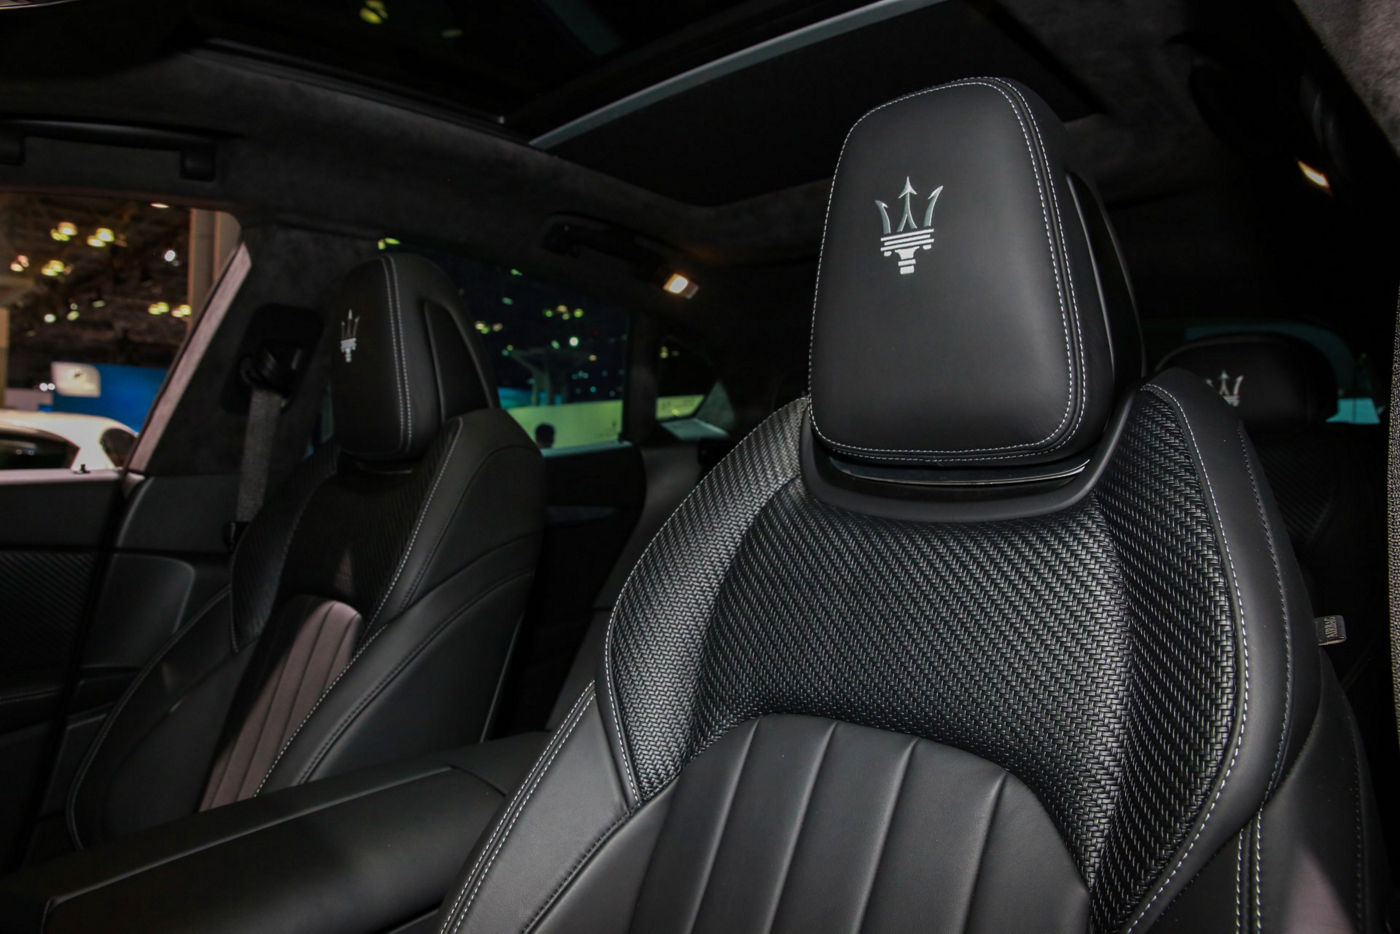 Maserati Levante Q4 GranSport - interior detail - headrests with stitched Maserati logos